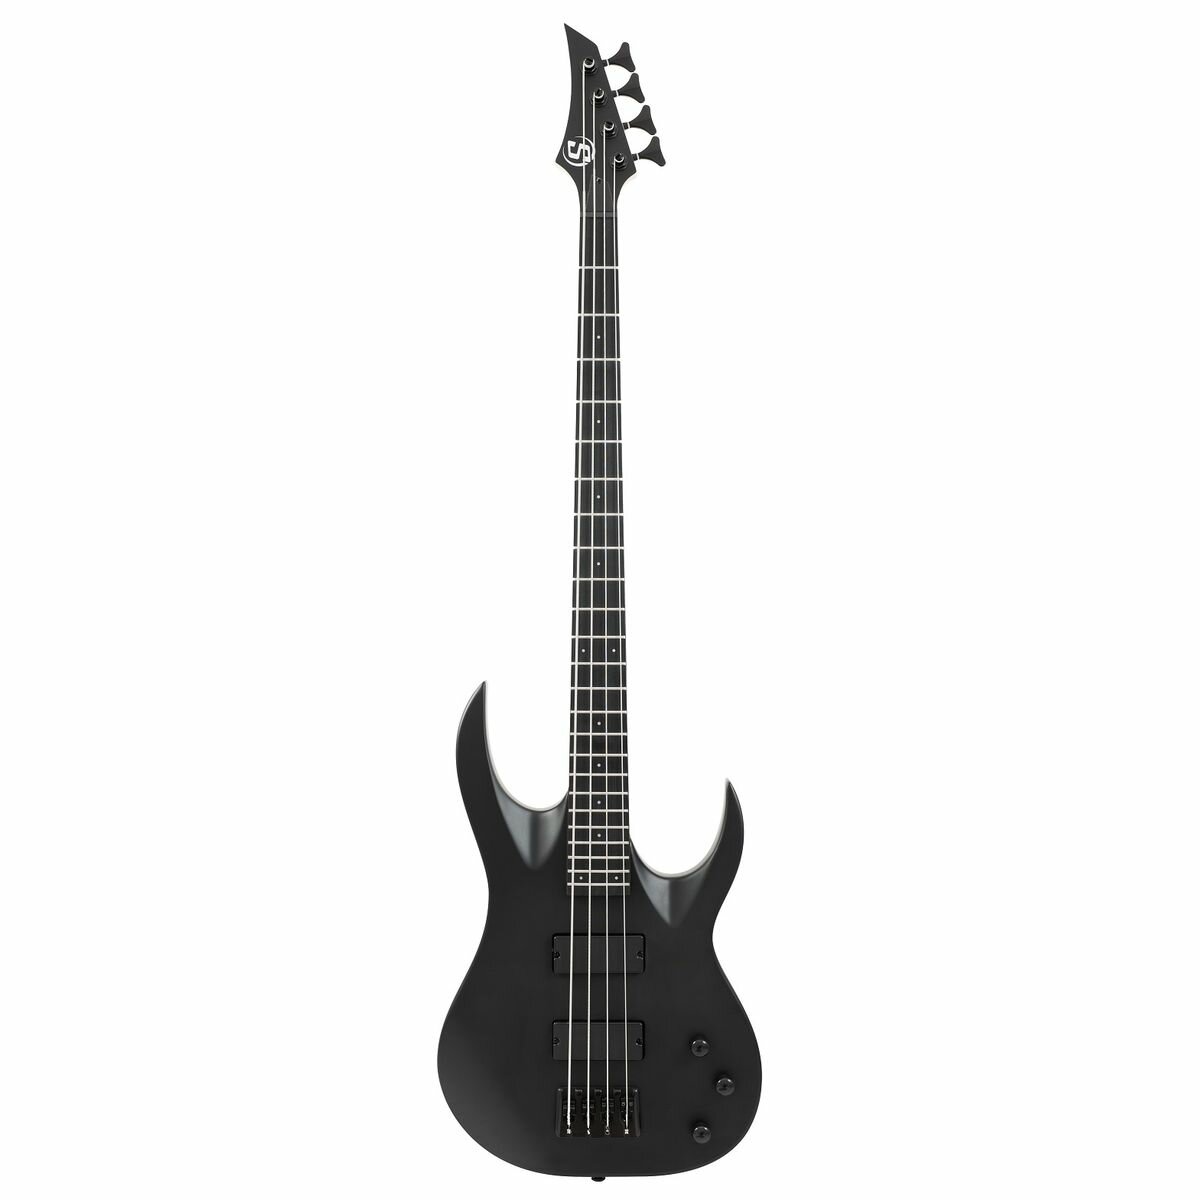 S by Solar AB4.4C бас-гитара цвет черный